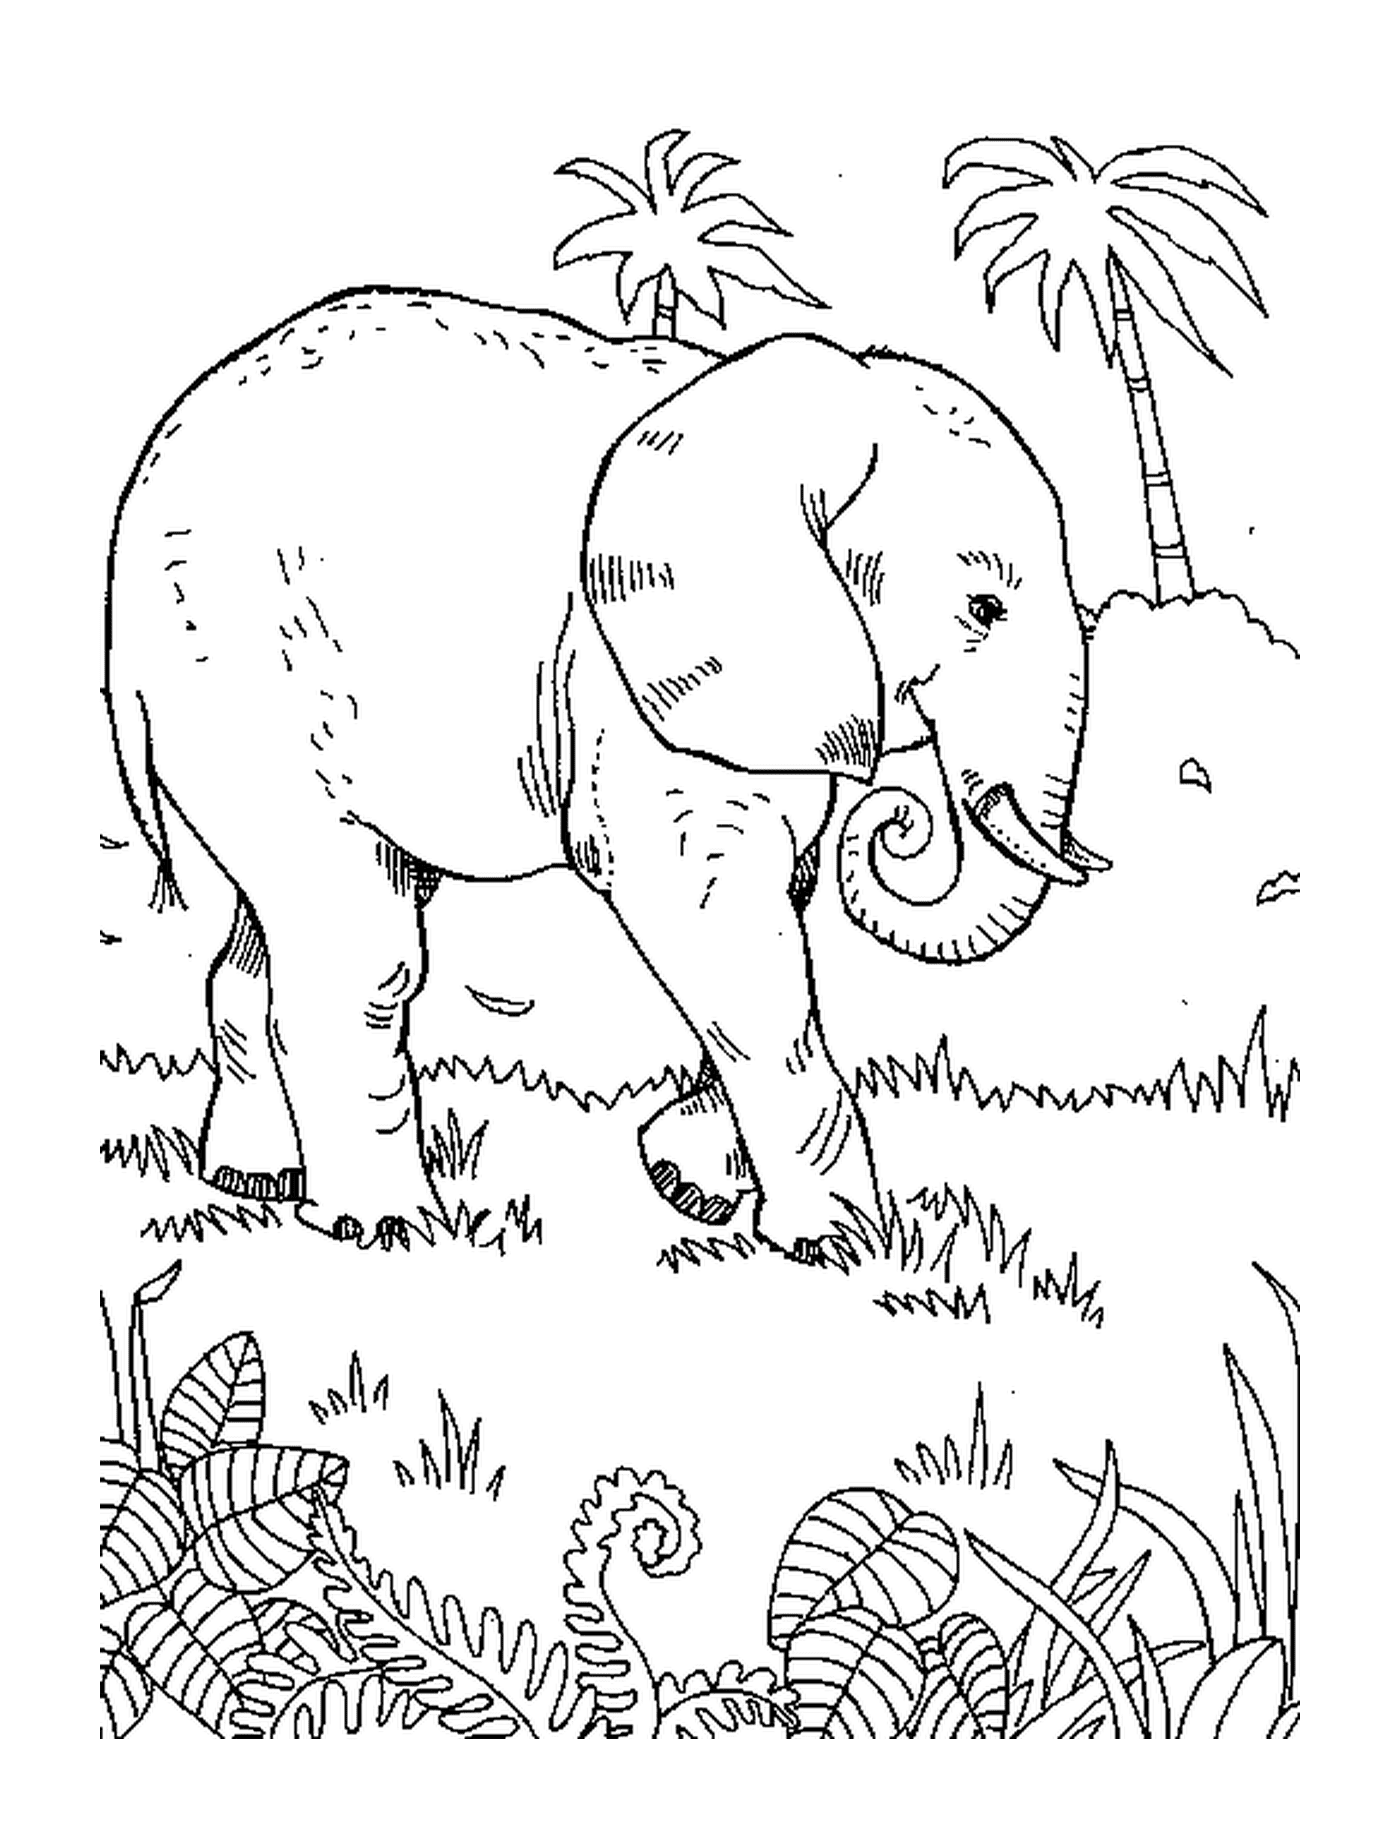  An elephant walking in the grass near a palm tree 